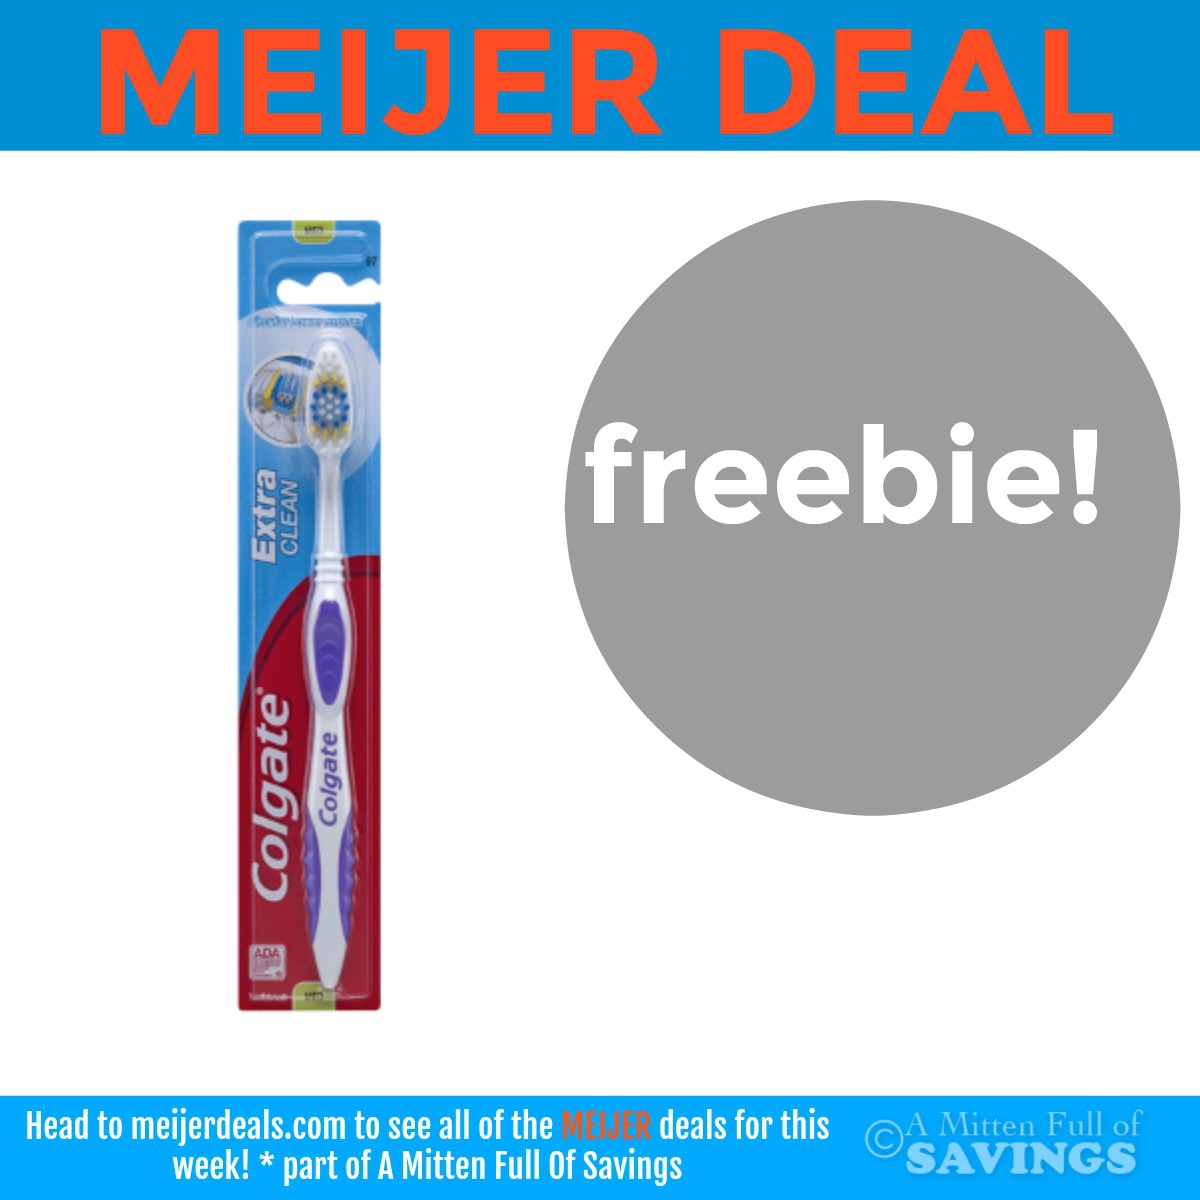 Free colgate toothbrushes